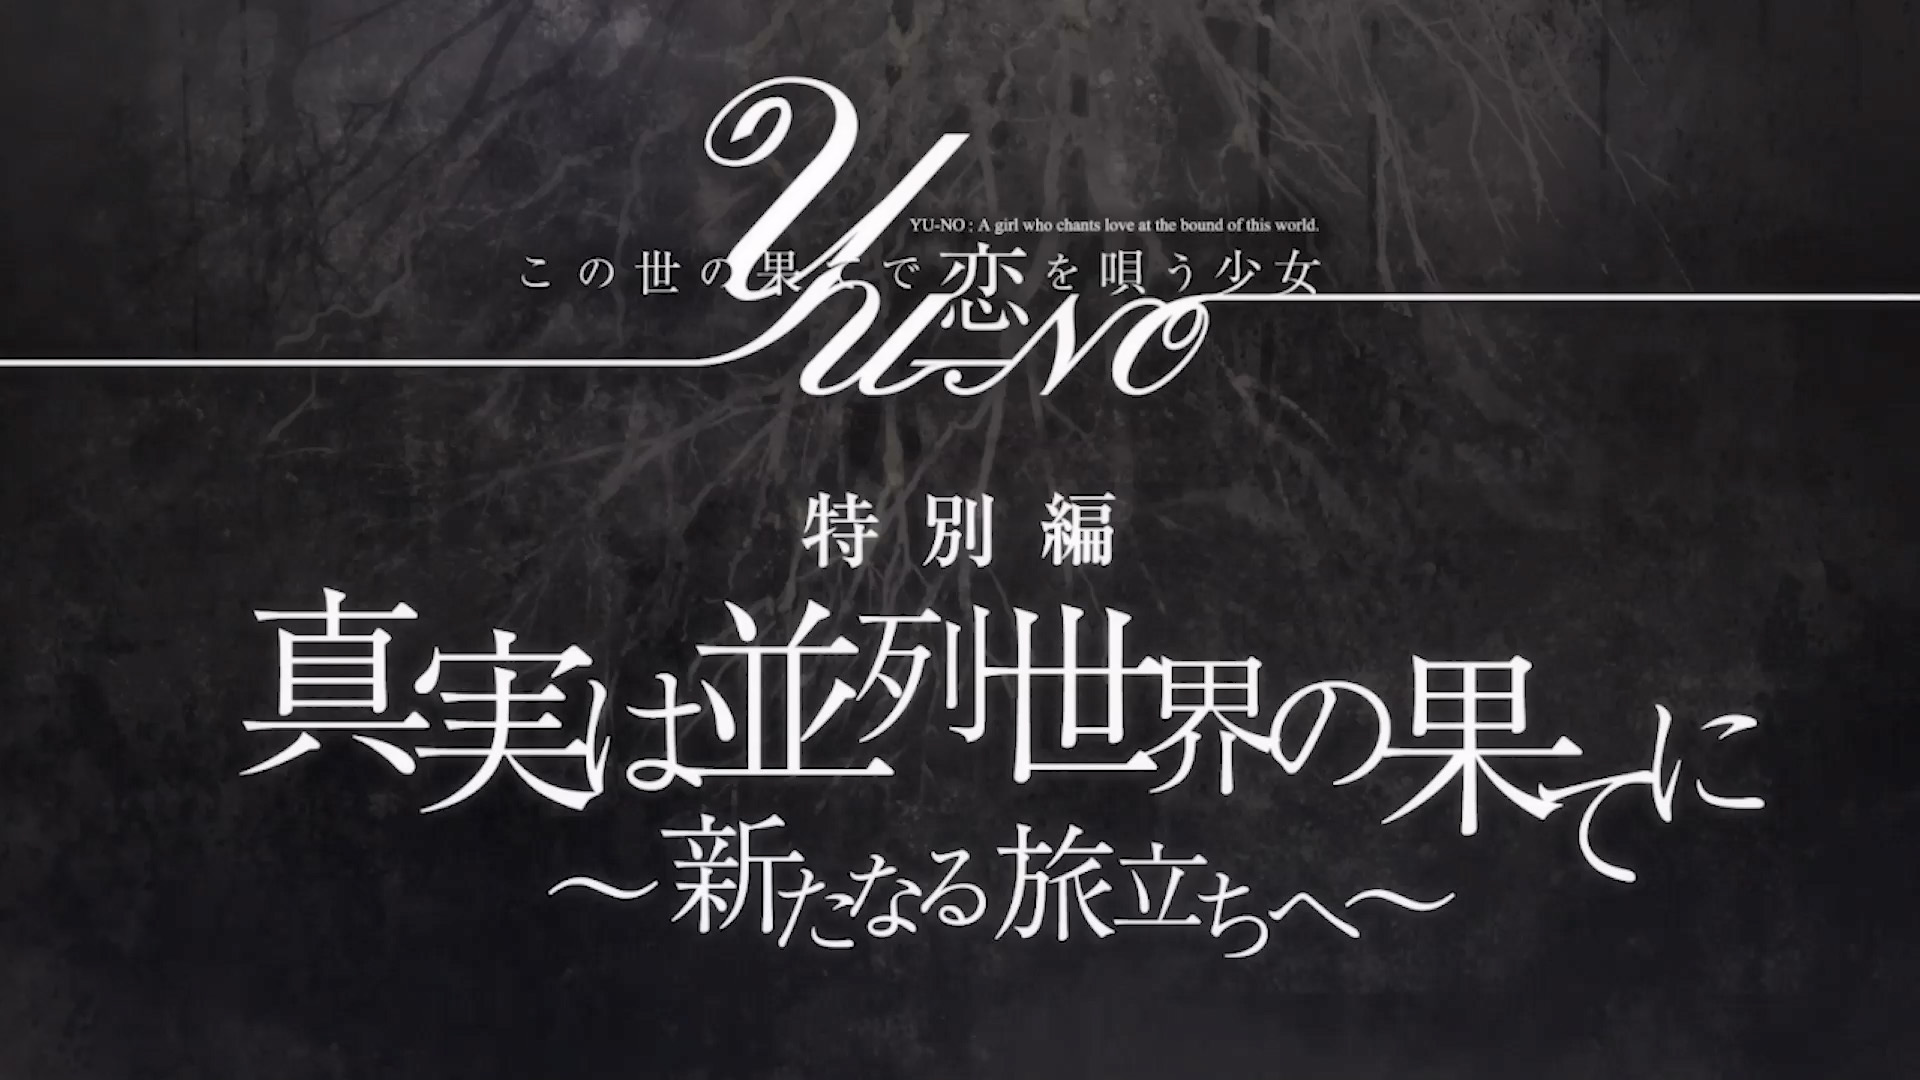 TVアニメ『この果てで恋を唄う少女YU-NO』「特別編」